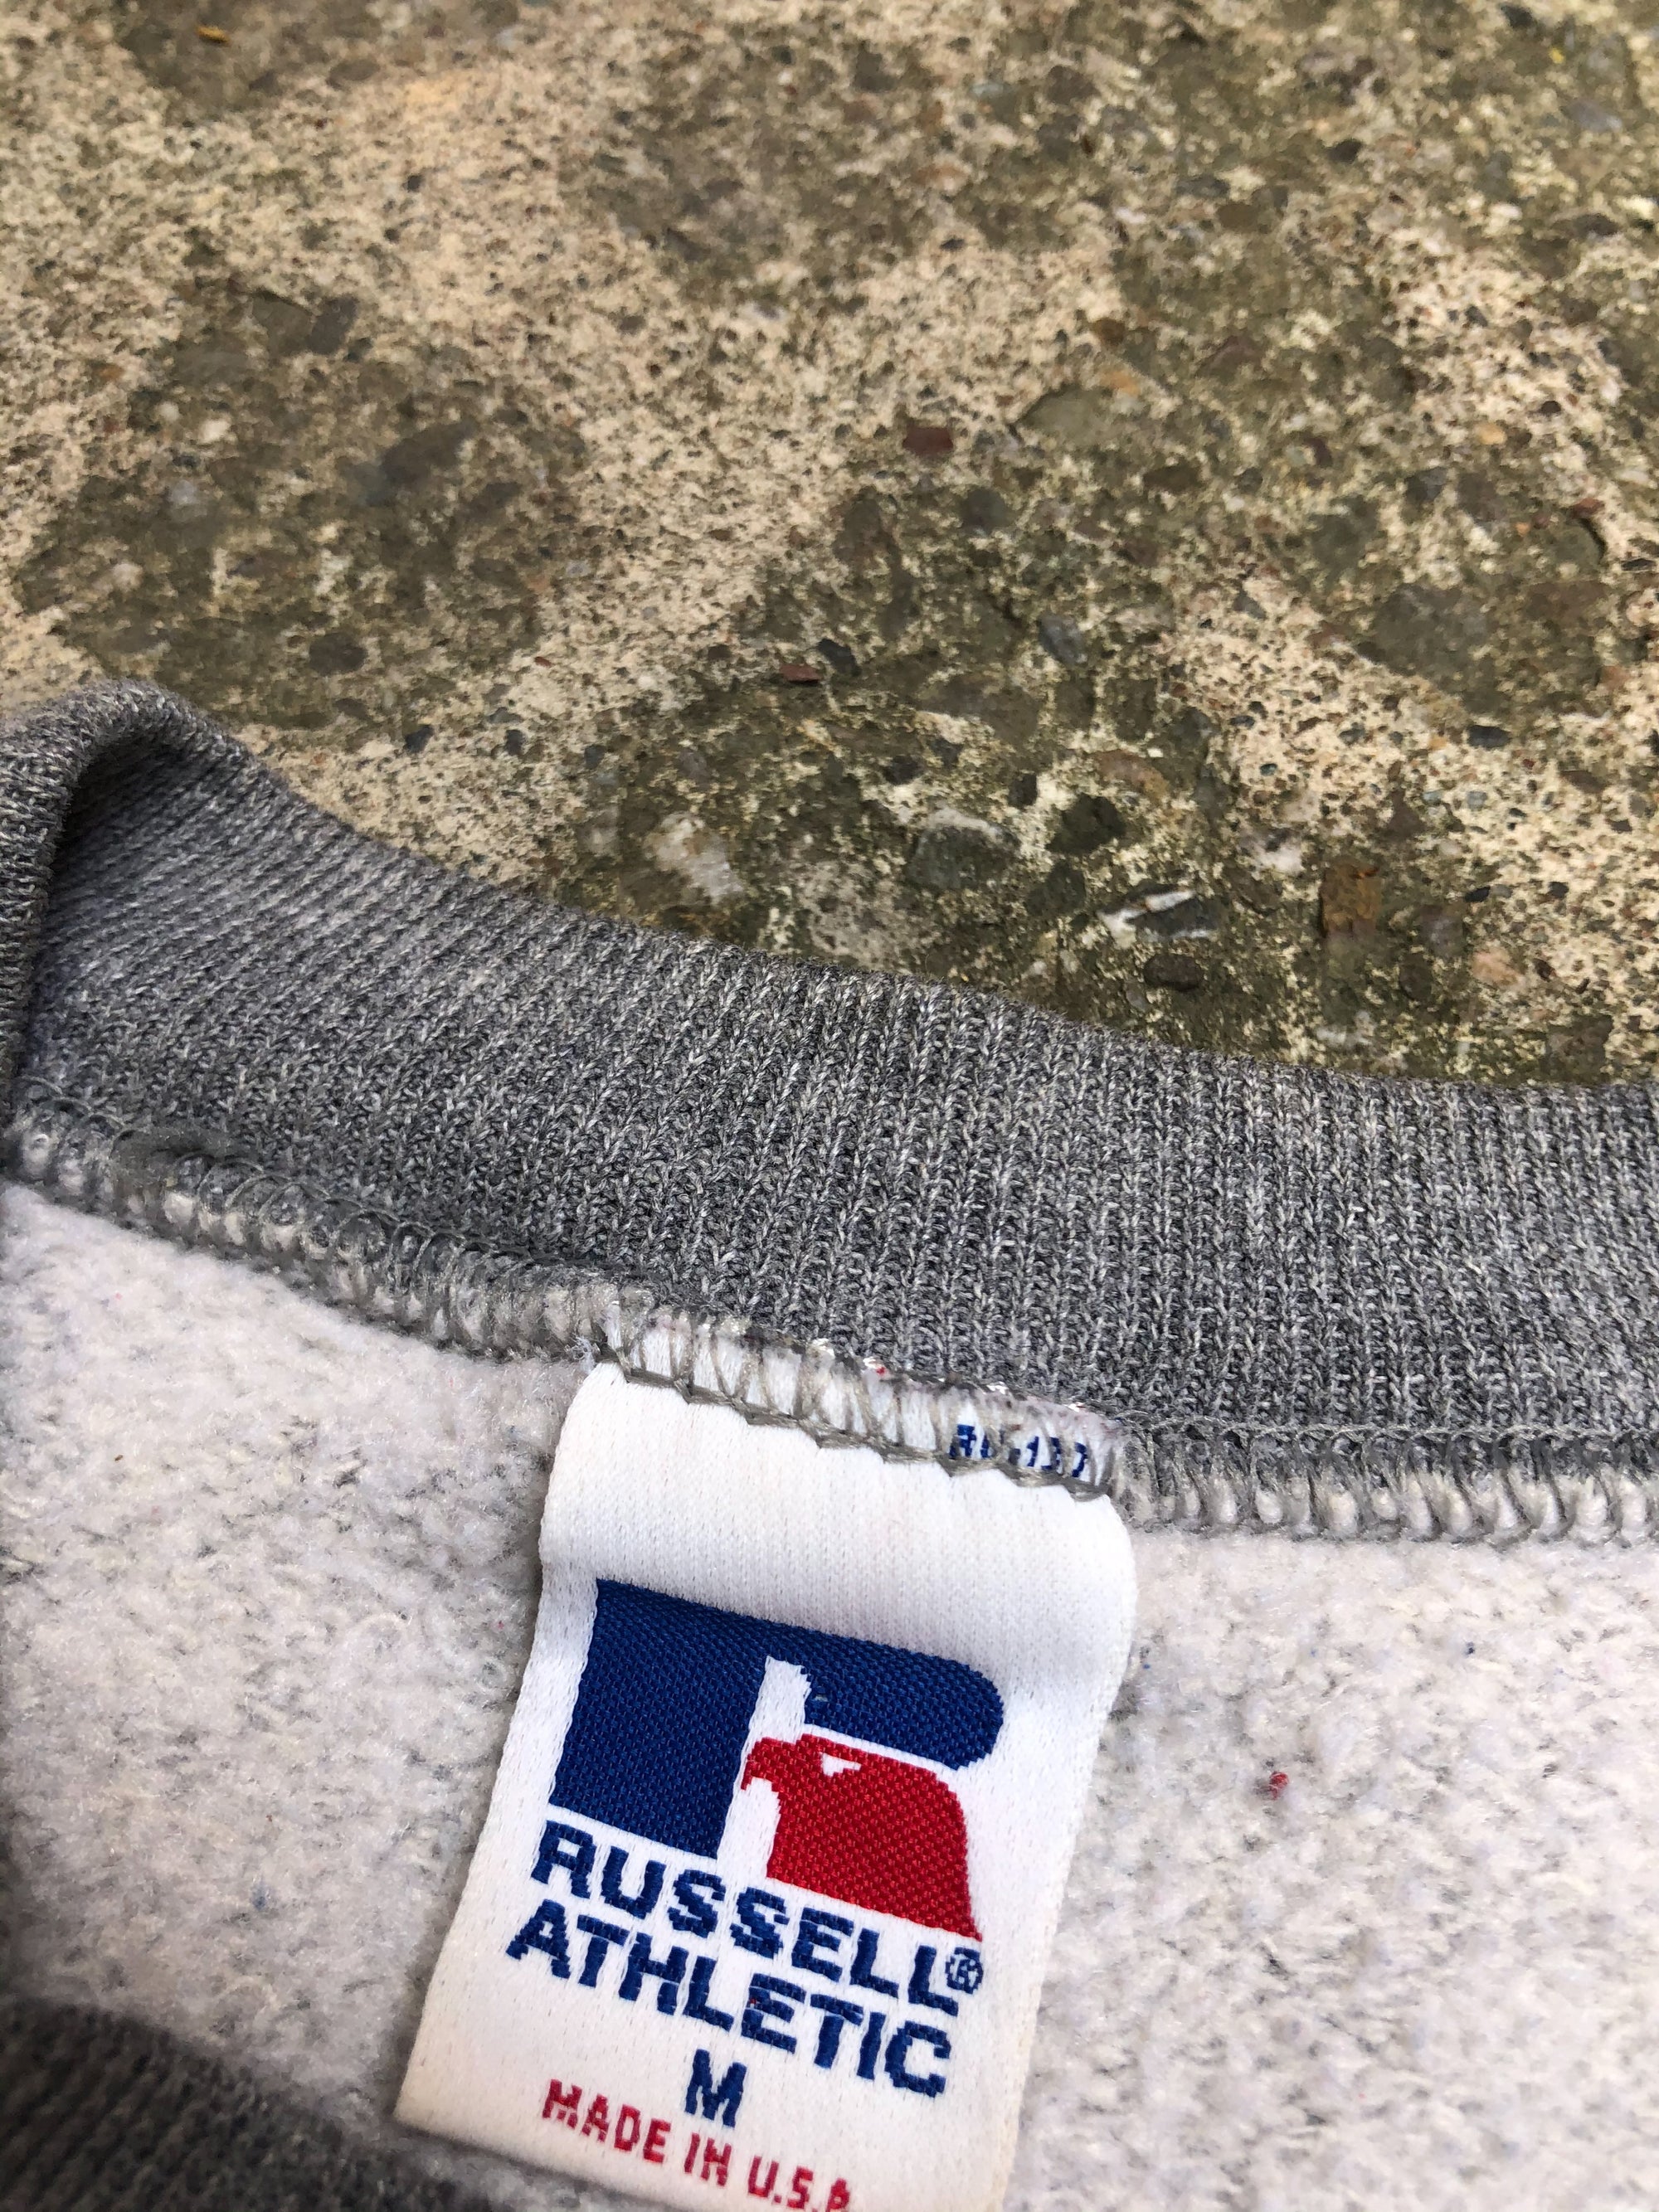 1990s Russell “Laboratory Schools” Sweatshirt (S/M)